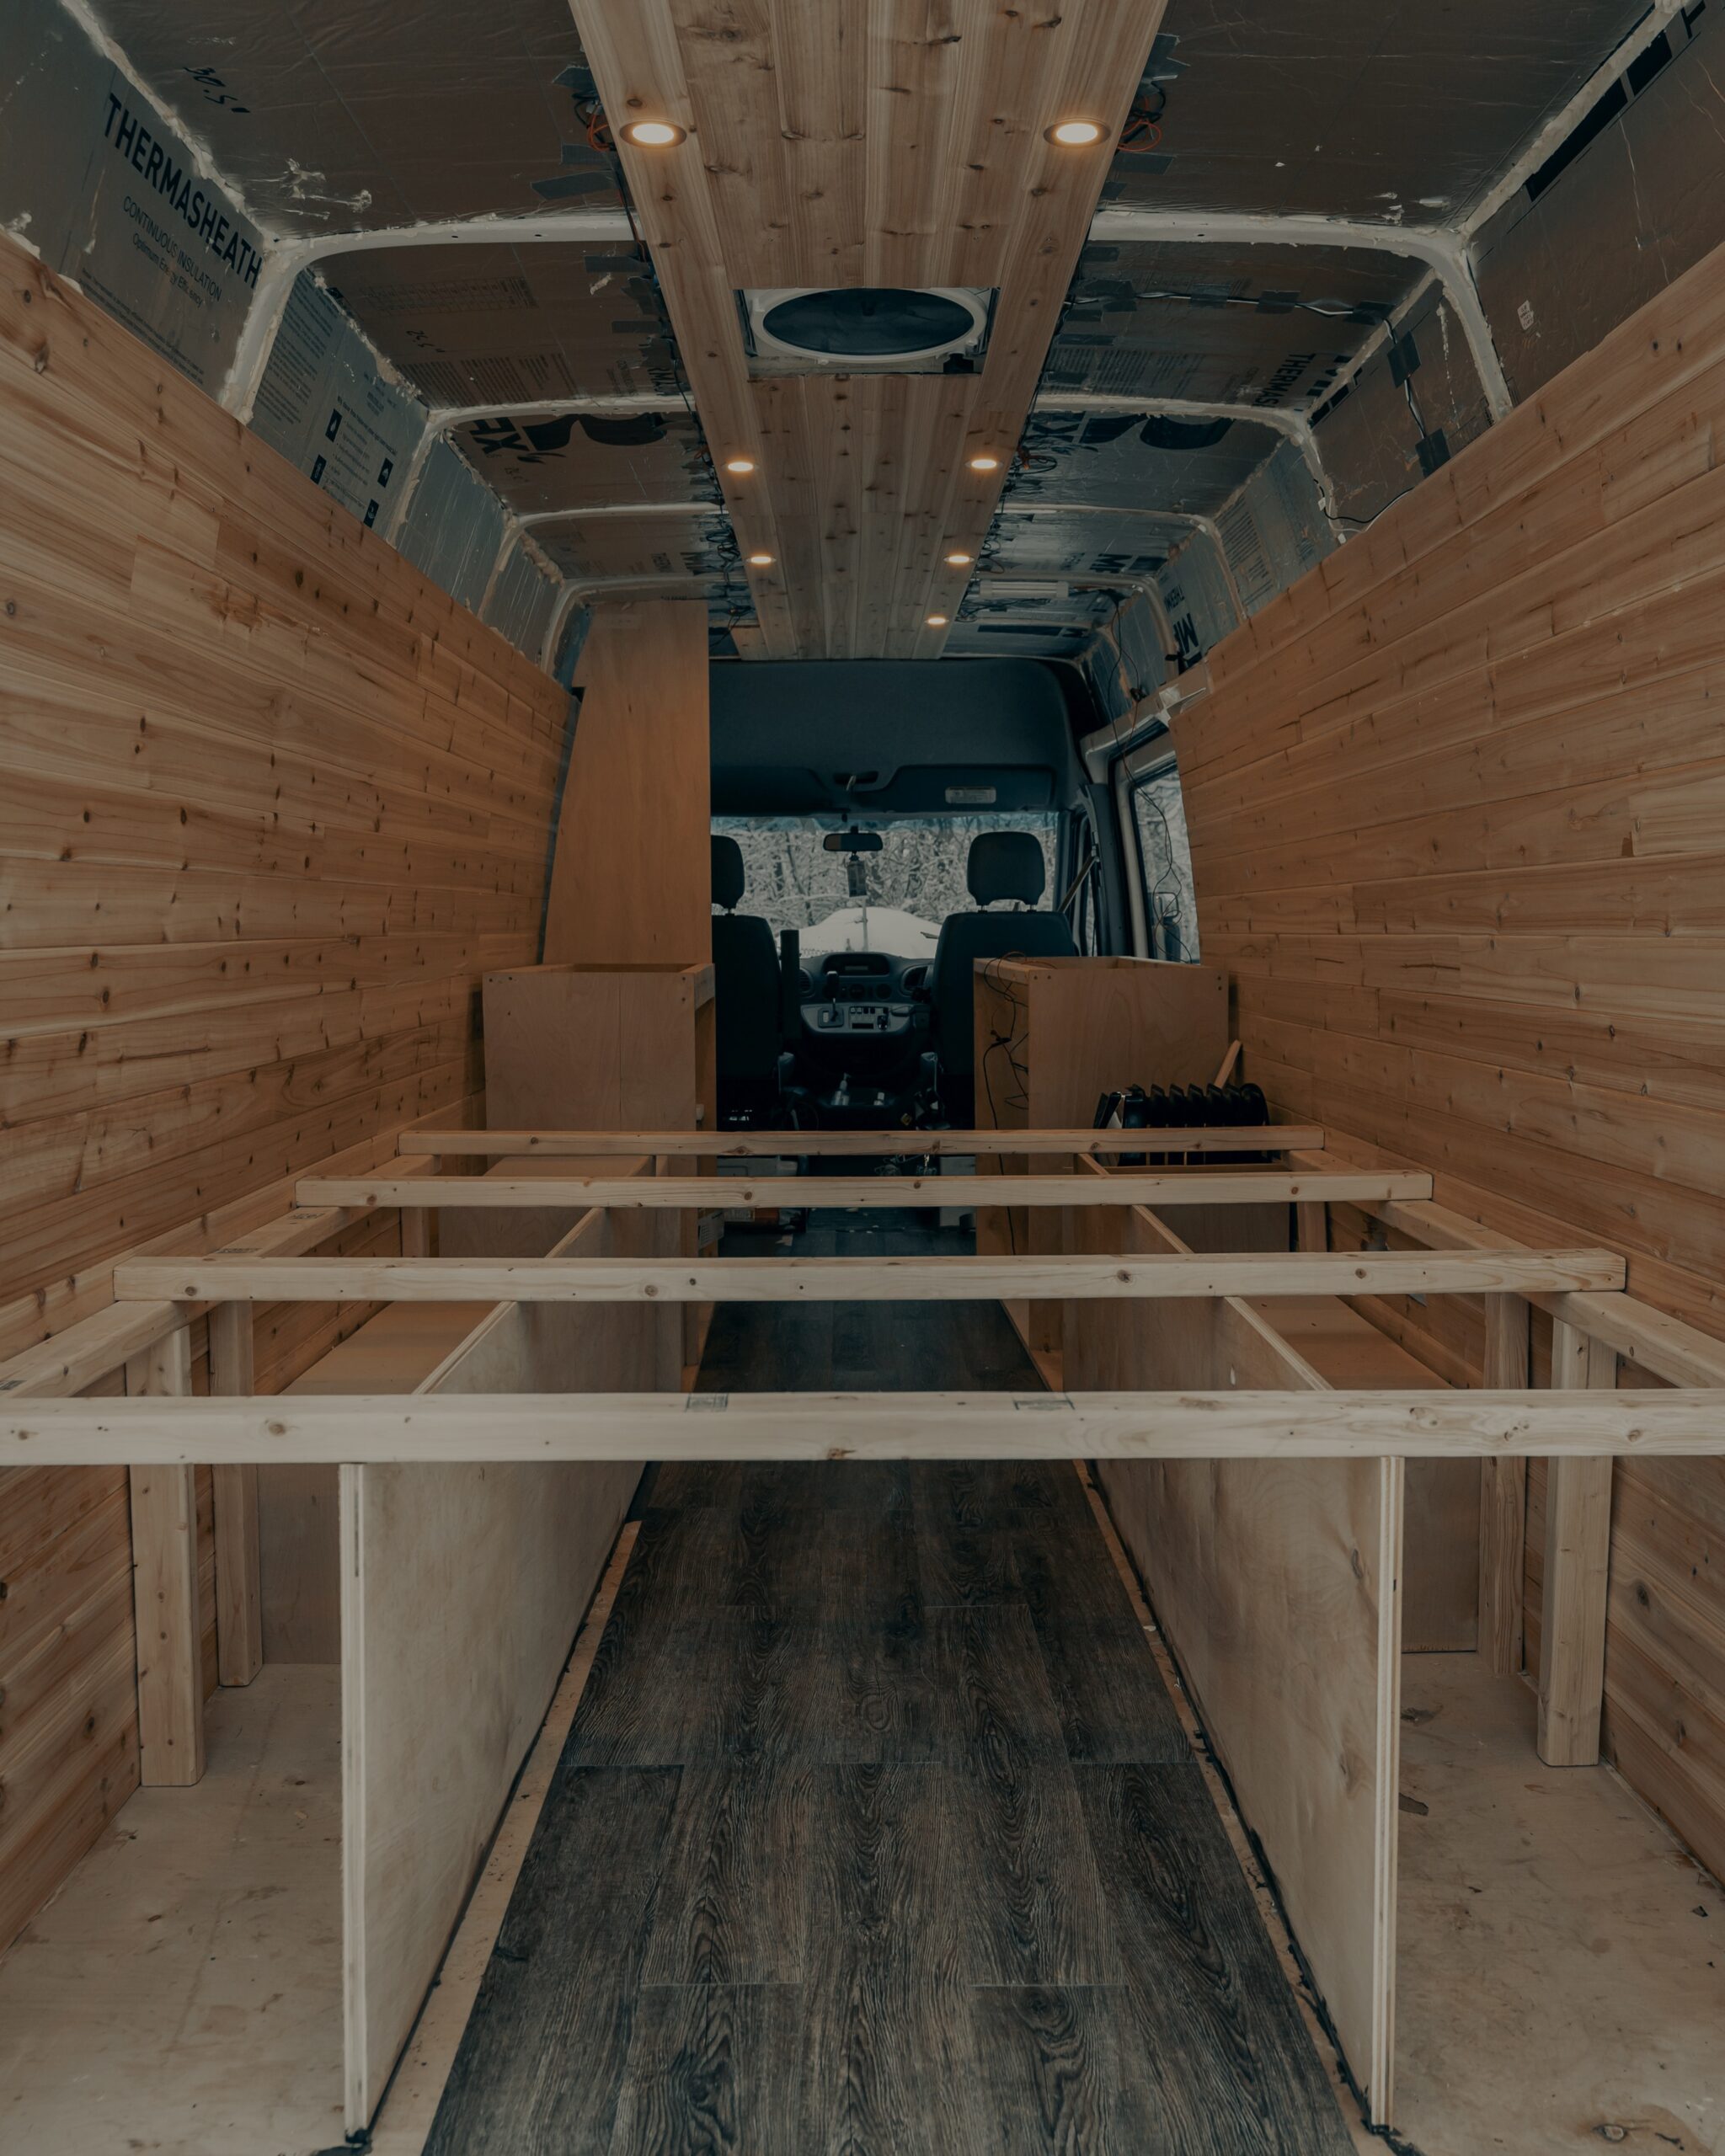 Converting a Van into a Campervan with Solar